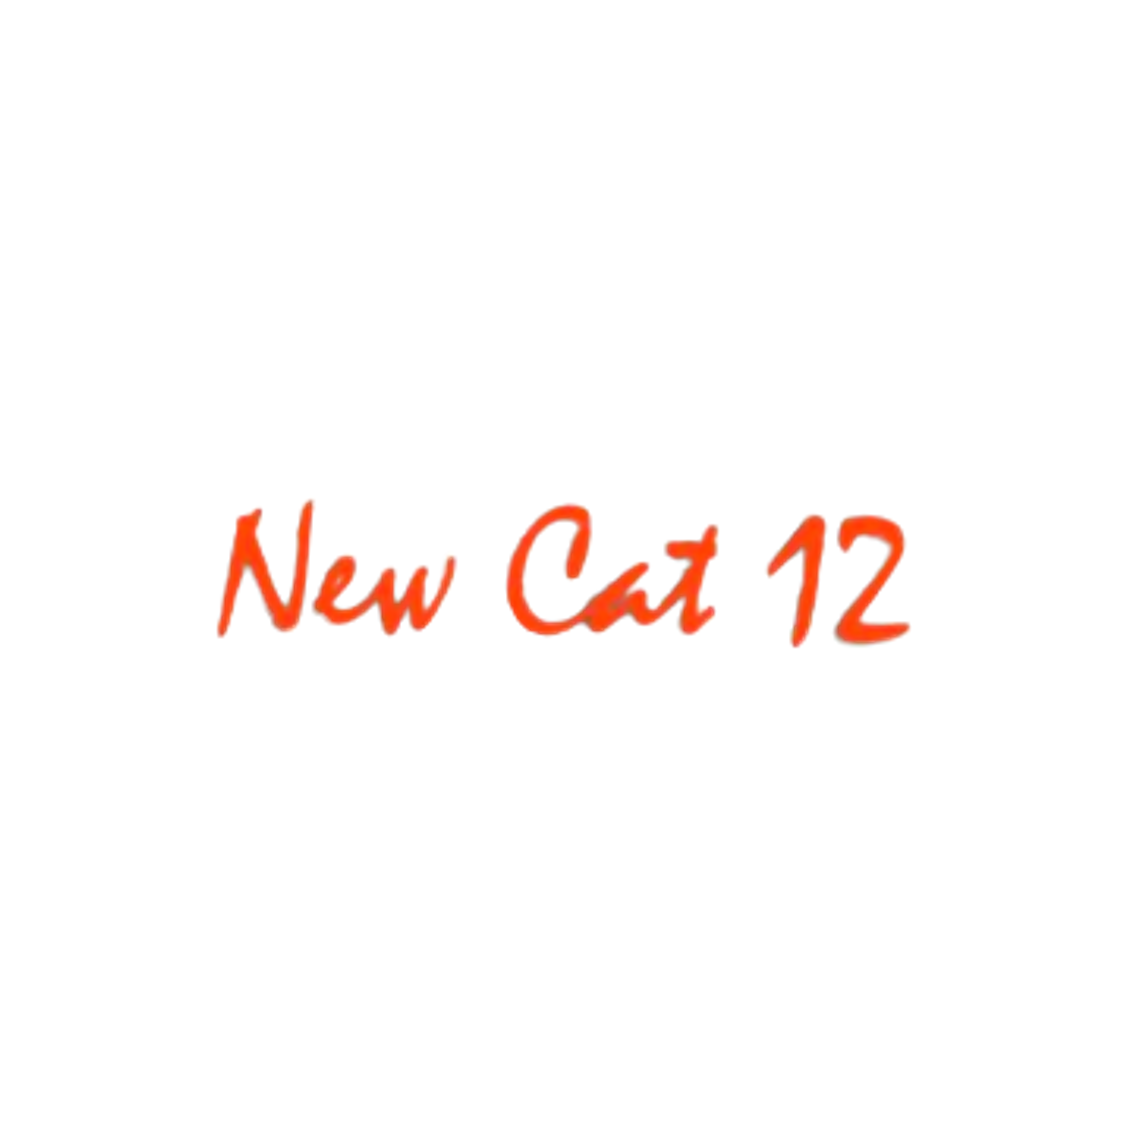 Compatible New Cat 12